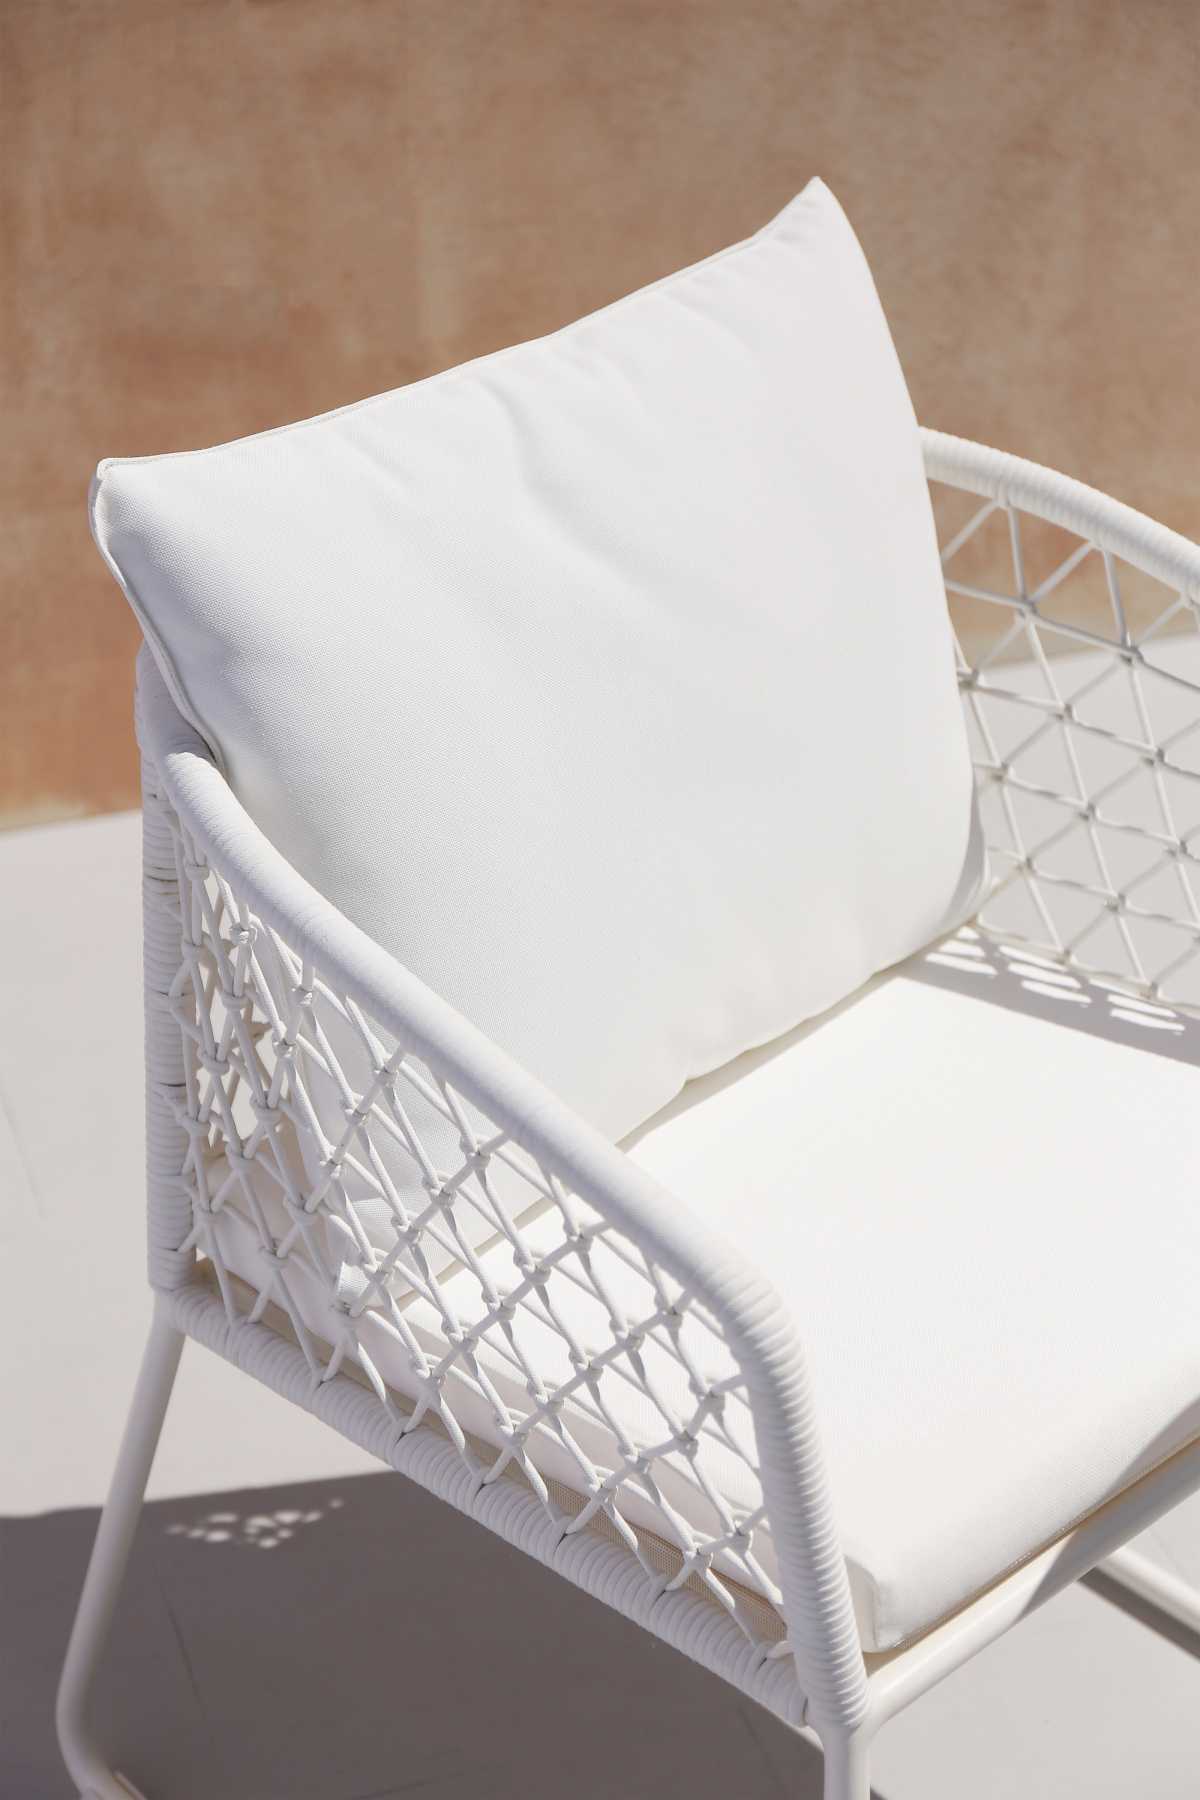 OHANA_dining_chair_detail_cushion_1_med